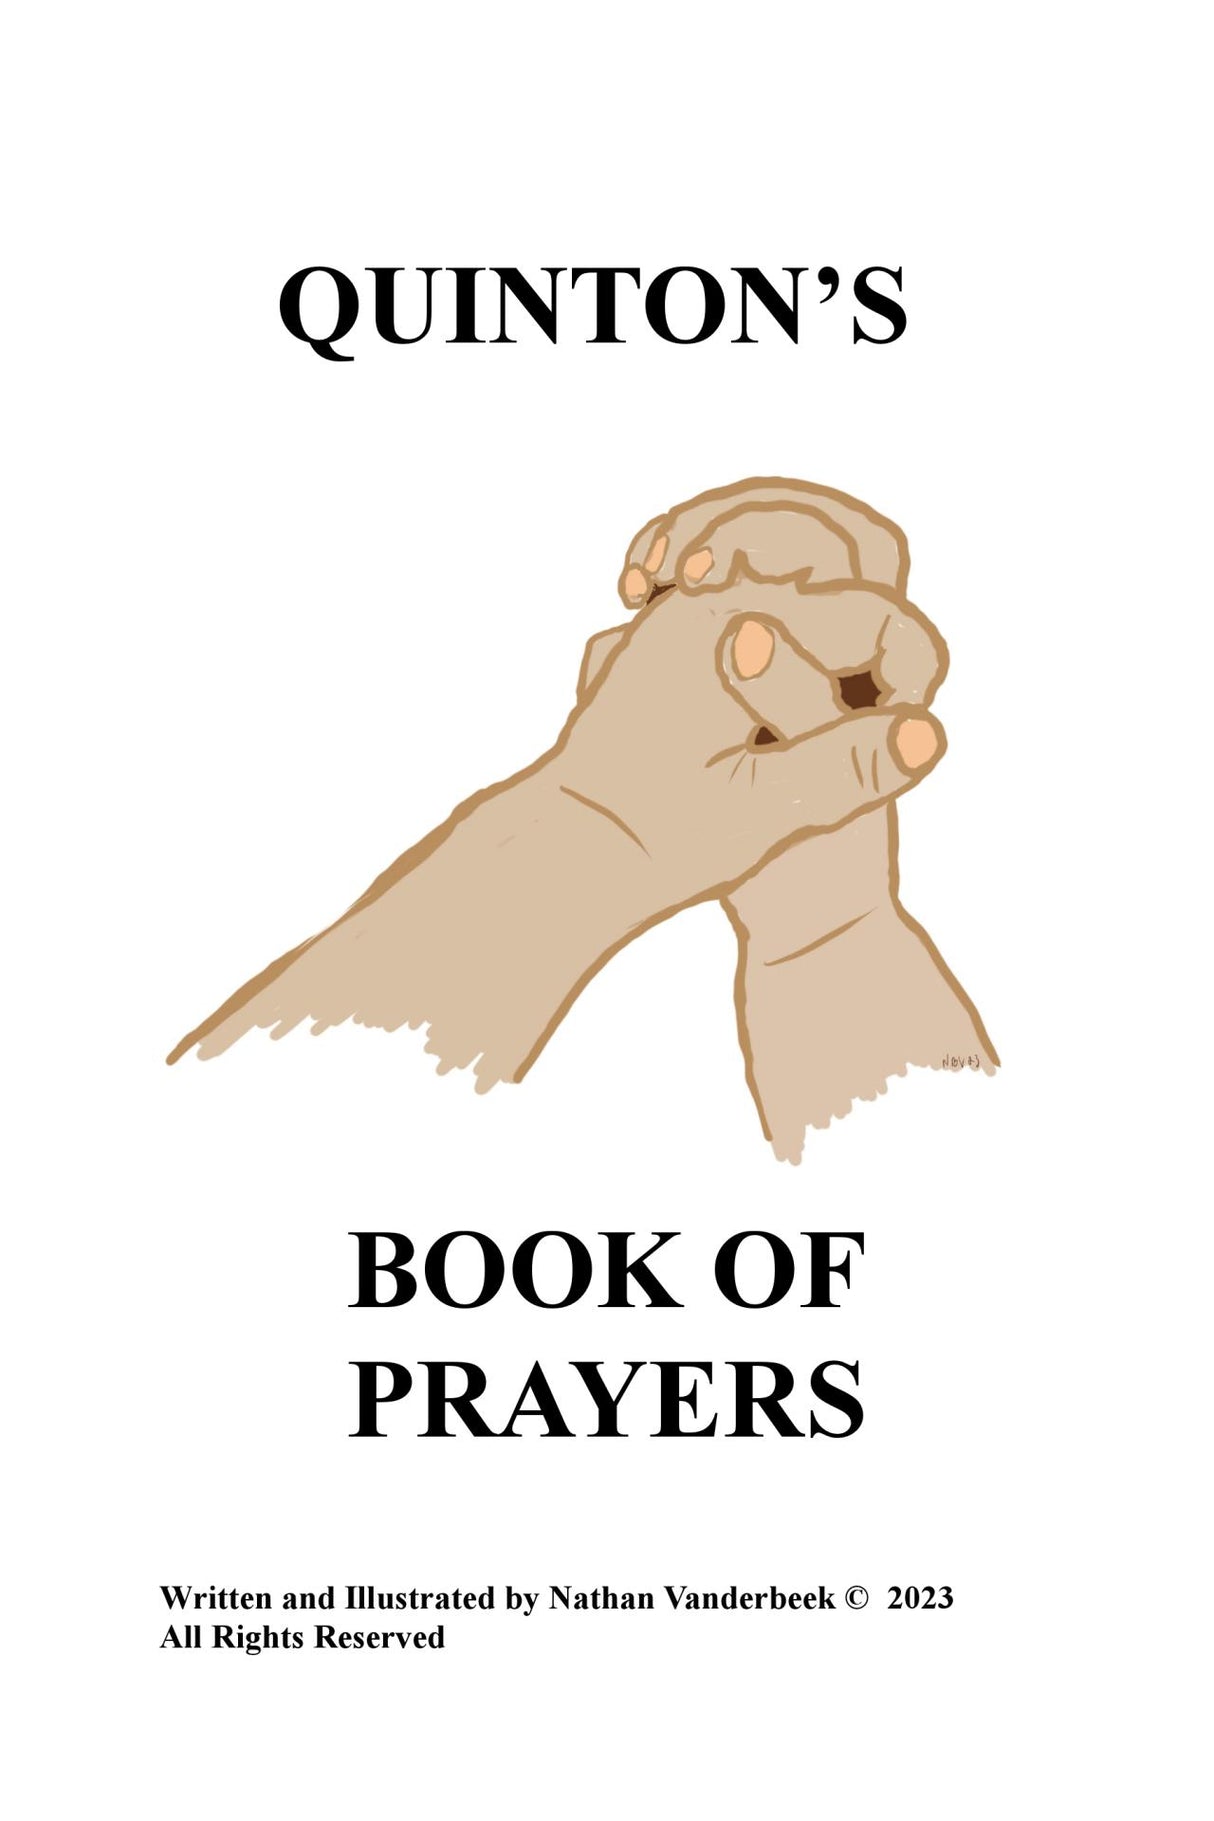 QUINTON'S BOOK OF PRAYERS